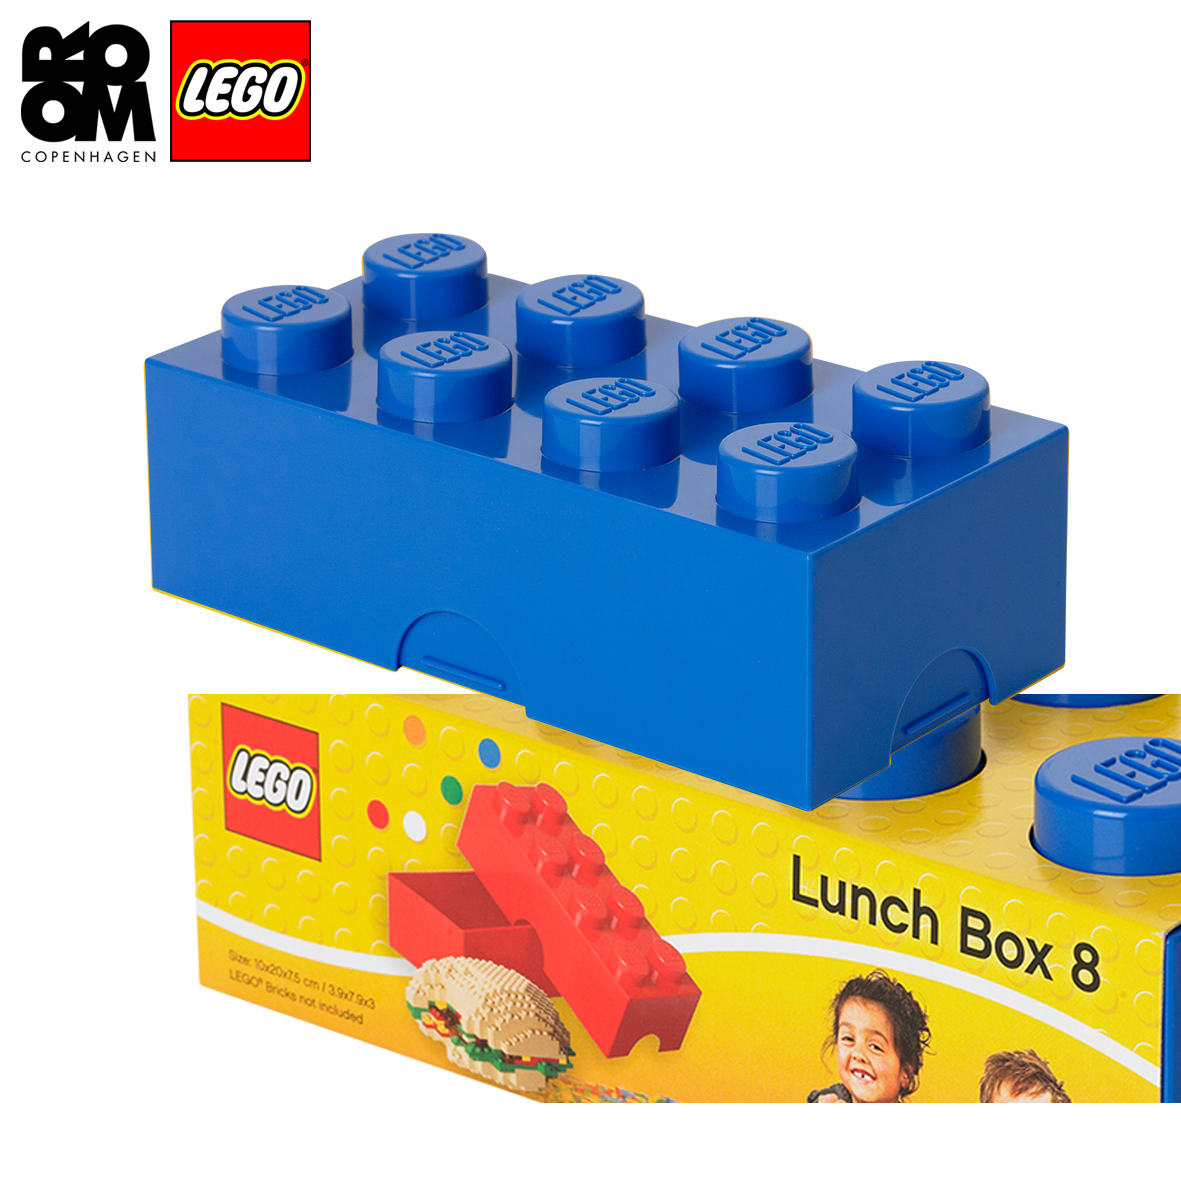 XL Lego Lunchbox, oder Etui etc, Blau - Znünibox (Brotdose, Aufbewahrungsbox), Room Copenhagen (4BA)